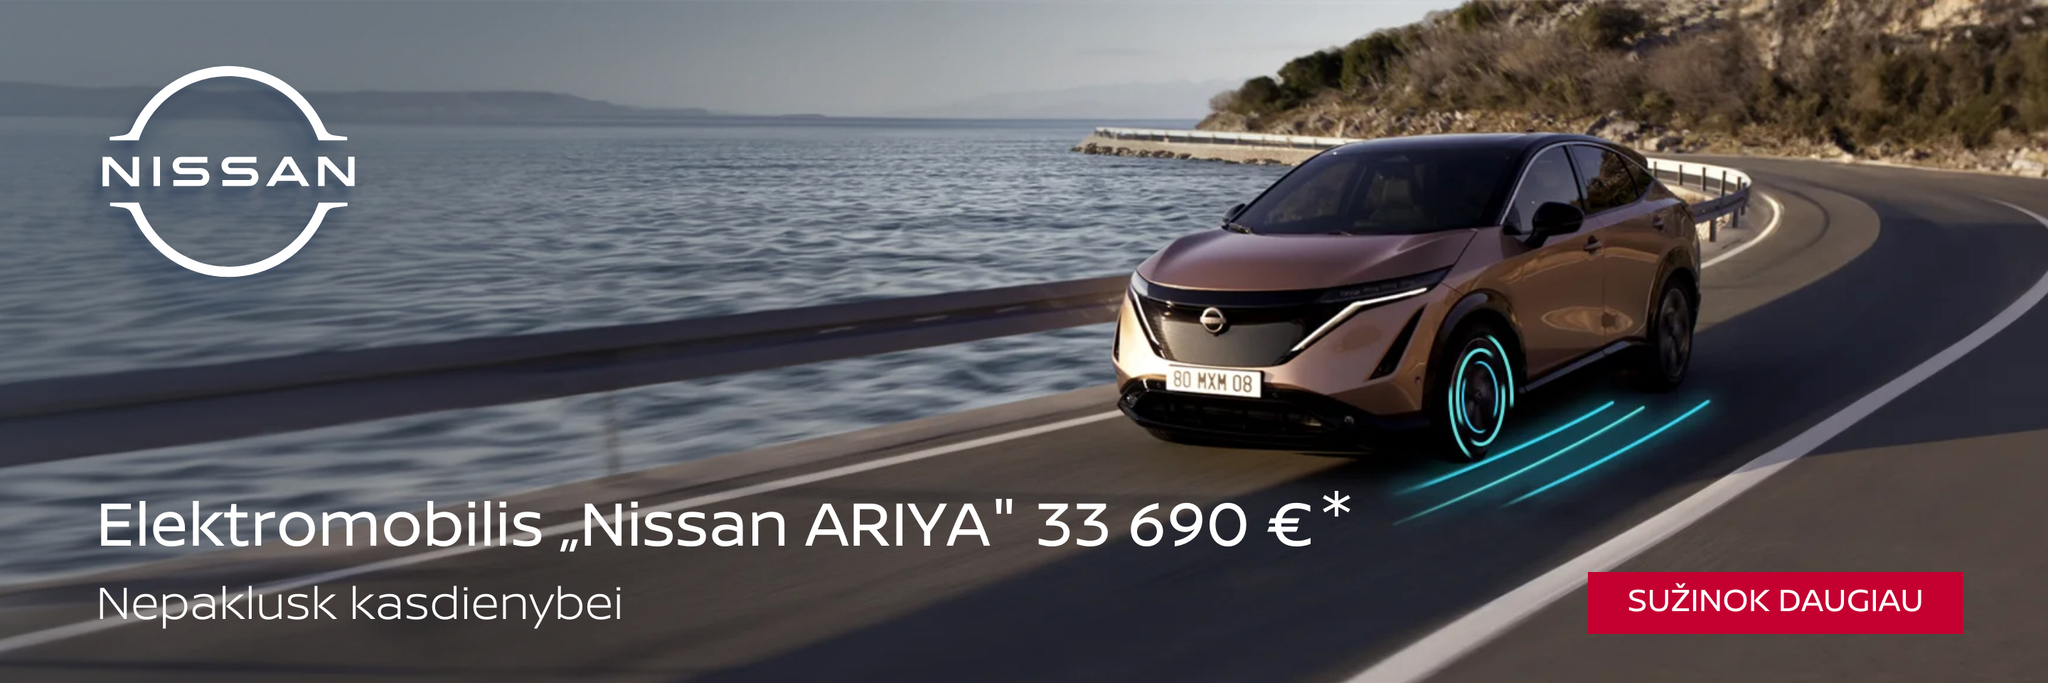 Nissan Ariya nuo 33690 Eur*